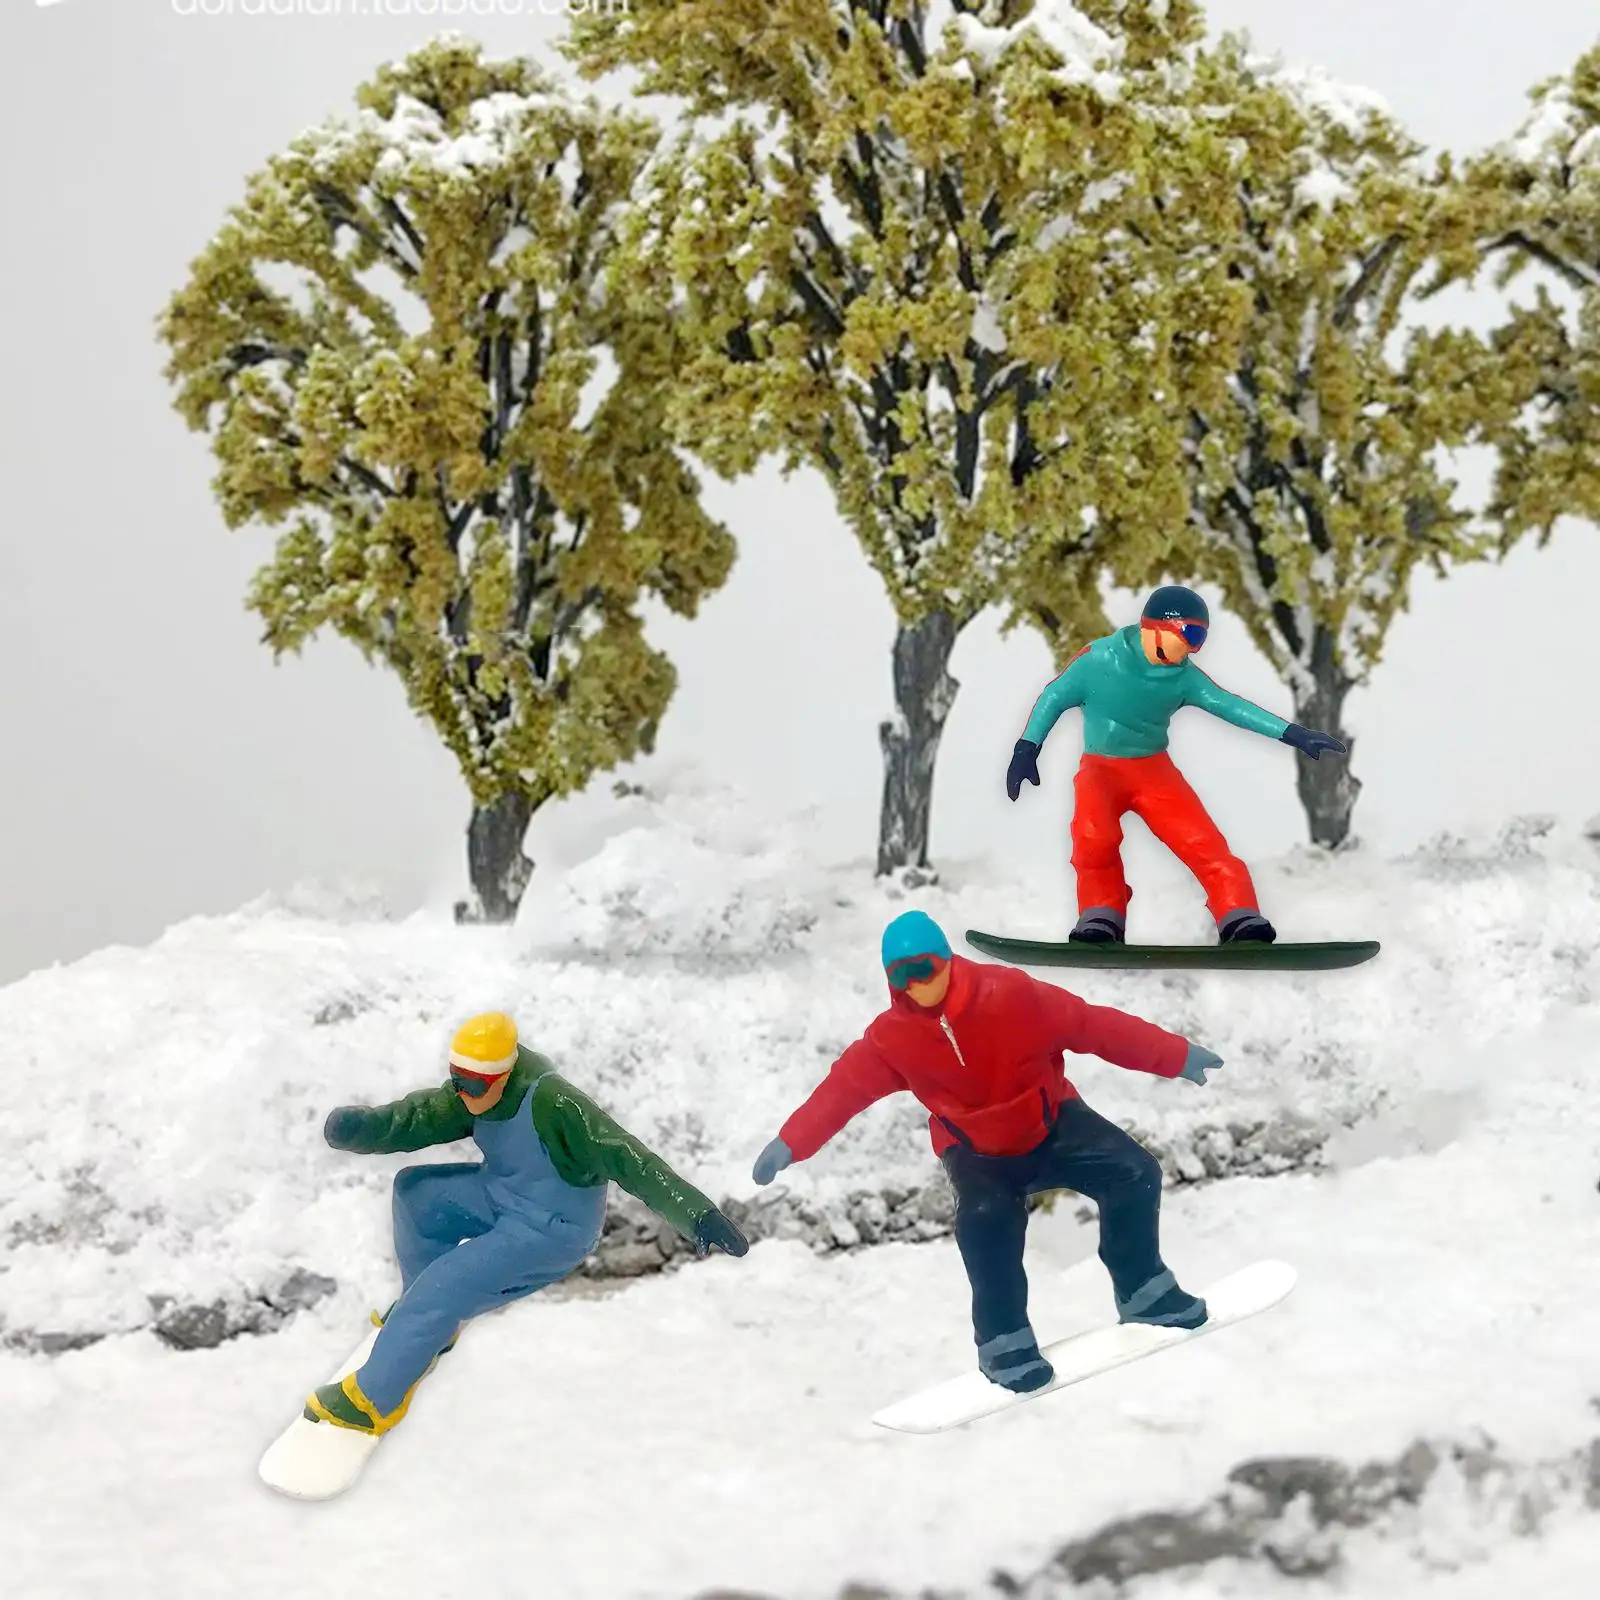 3 Pieces 1/64 Miniature Model Skiing Figures Micro Landscape Decoration